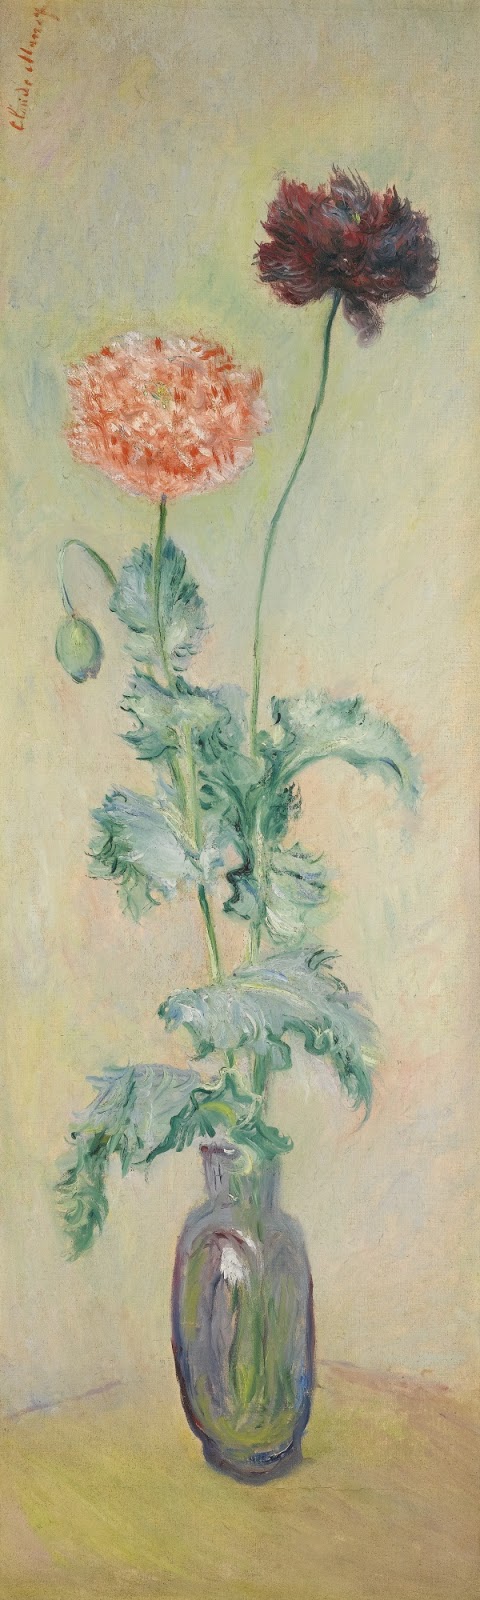 Claude+Monet-1840-1926 (573).jpg